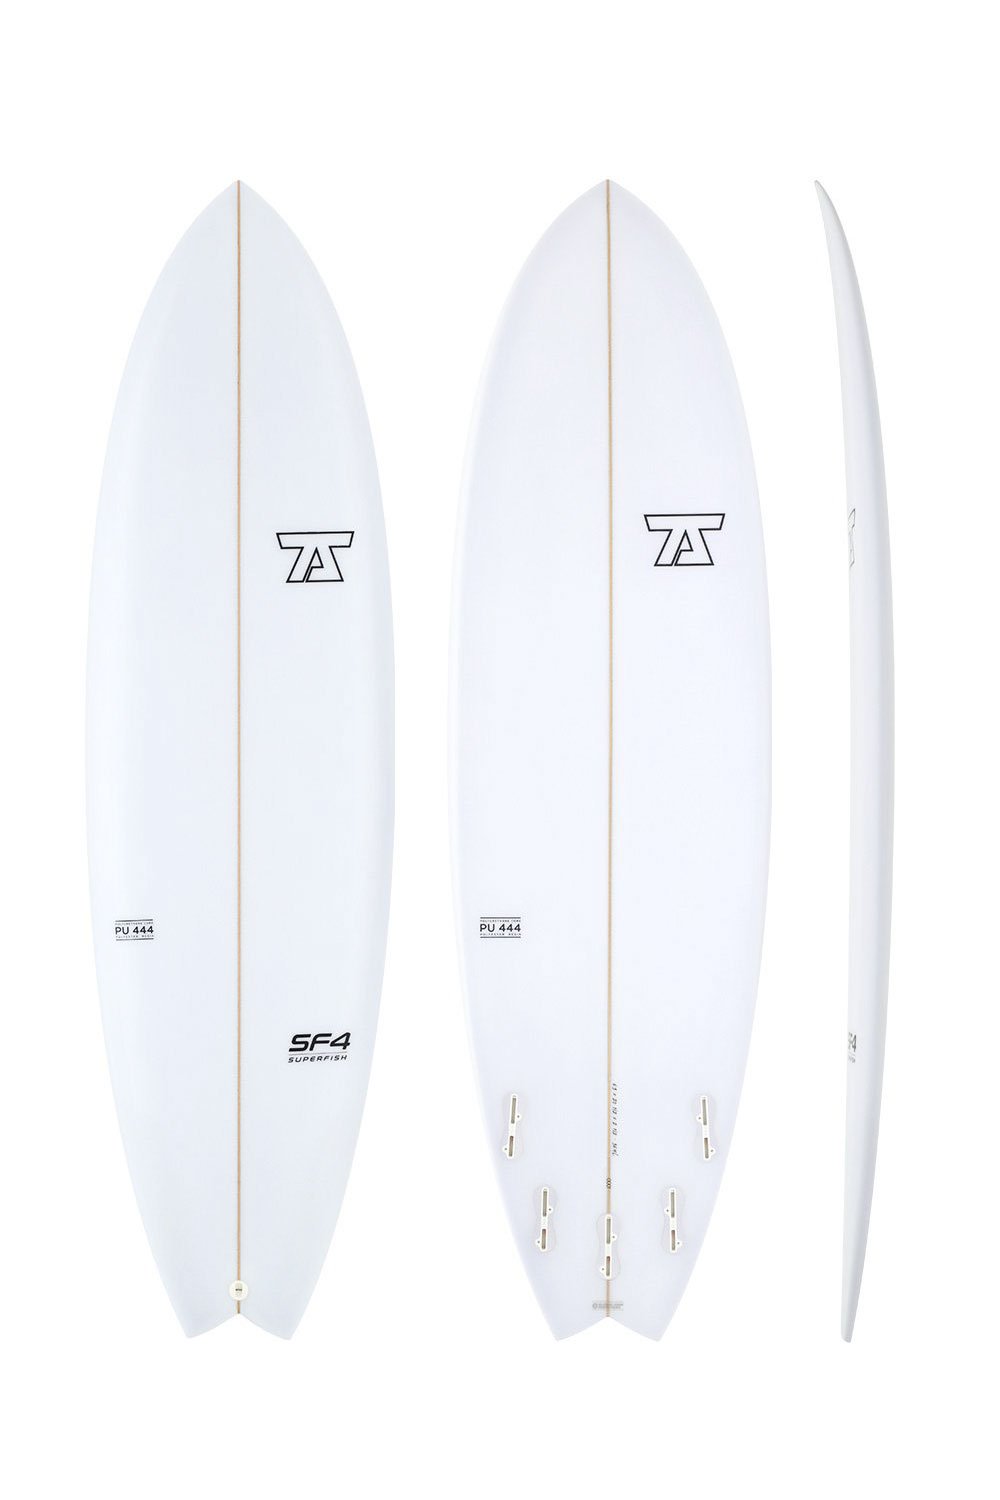  7S Superfish 4 PU Surfboard